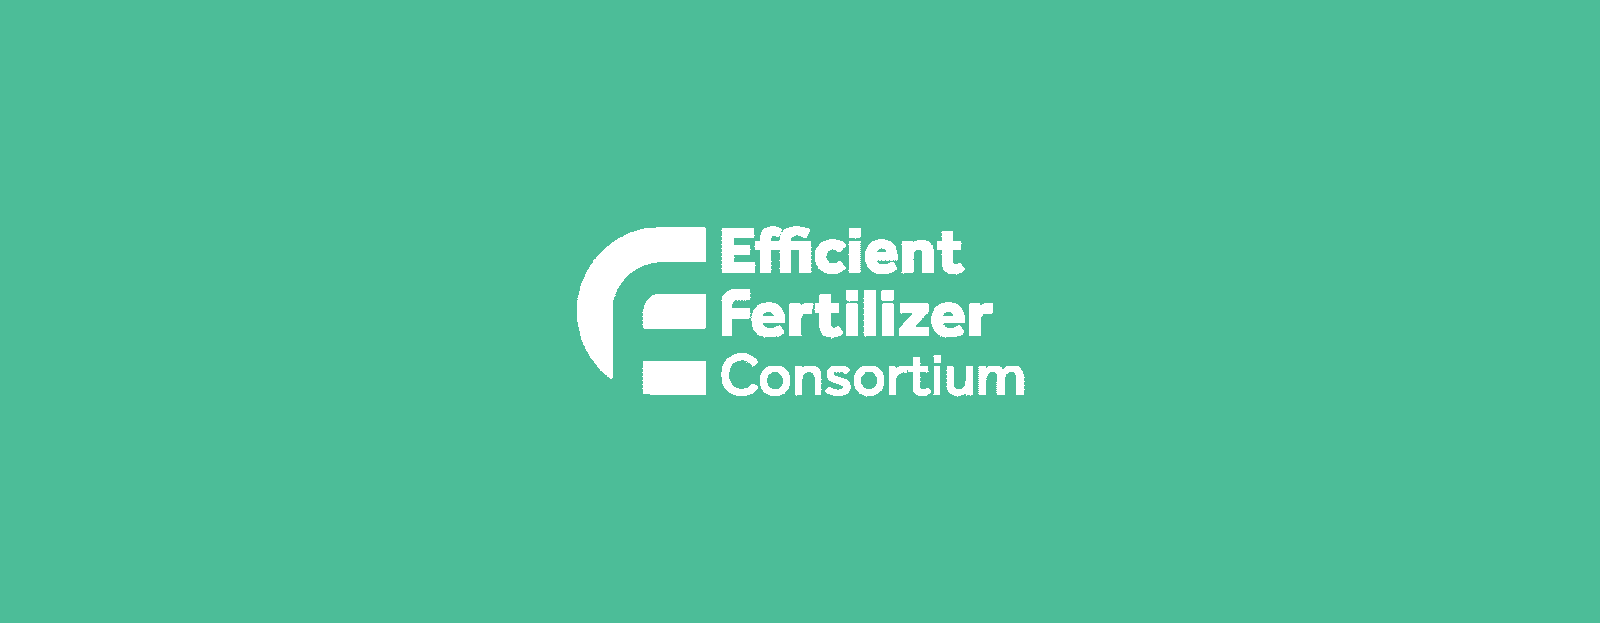 Canada enters partnership with the Efficient Fertilizer Consortium